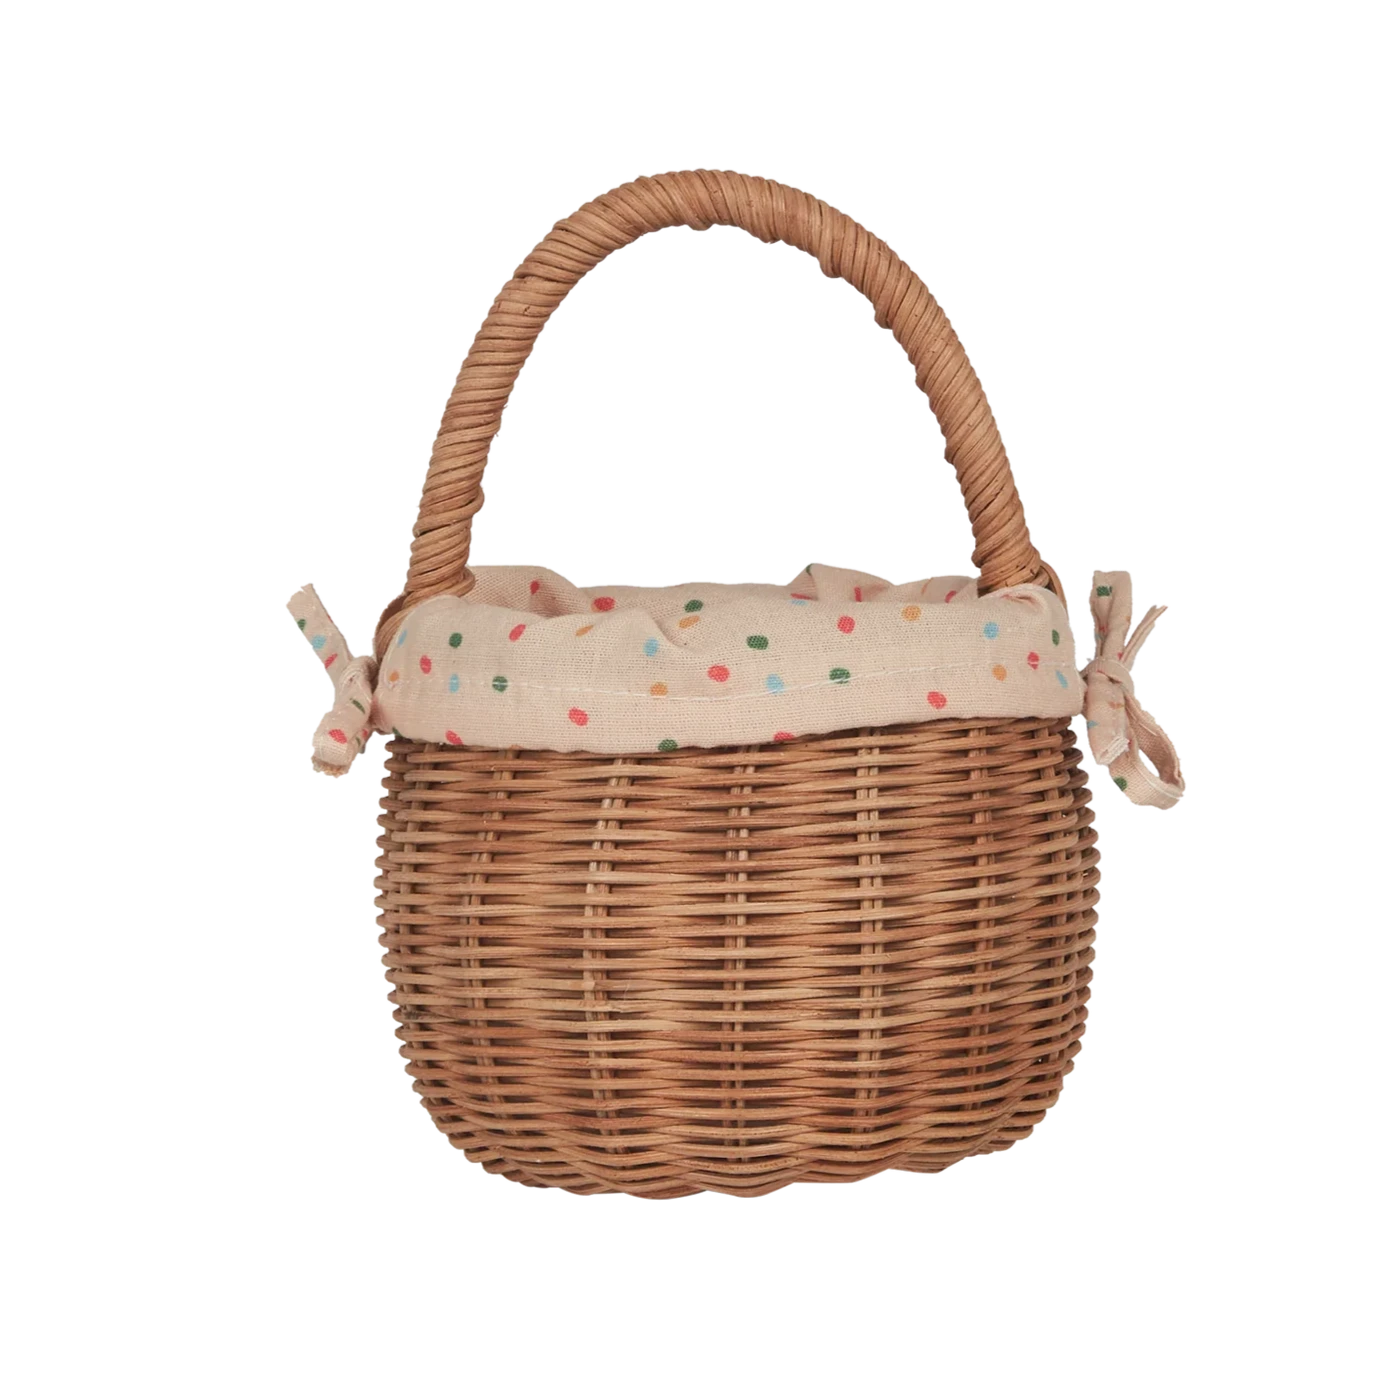 Rattan Berry Basket with Lining - Gumdrop